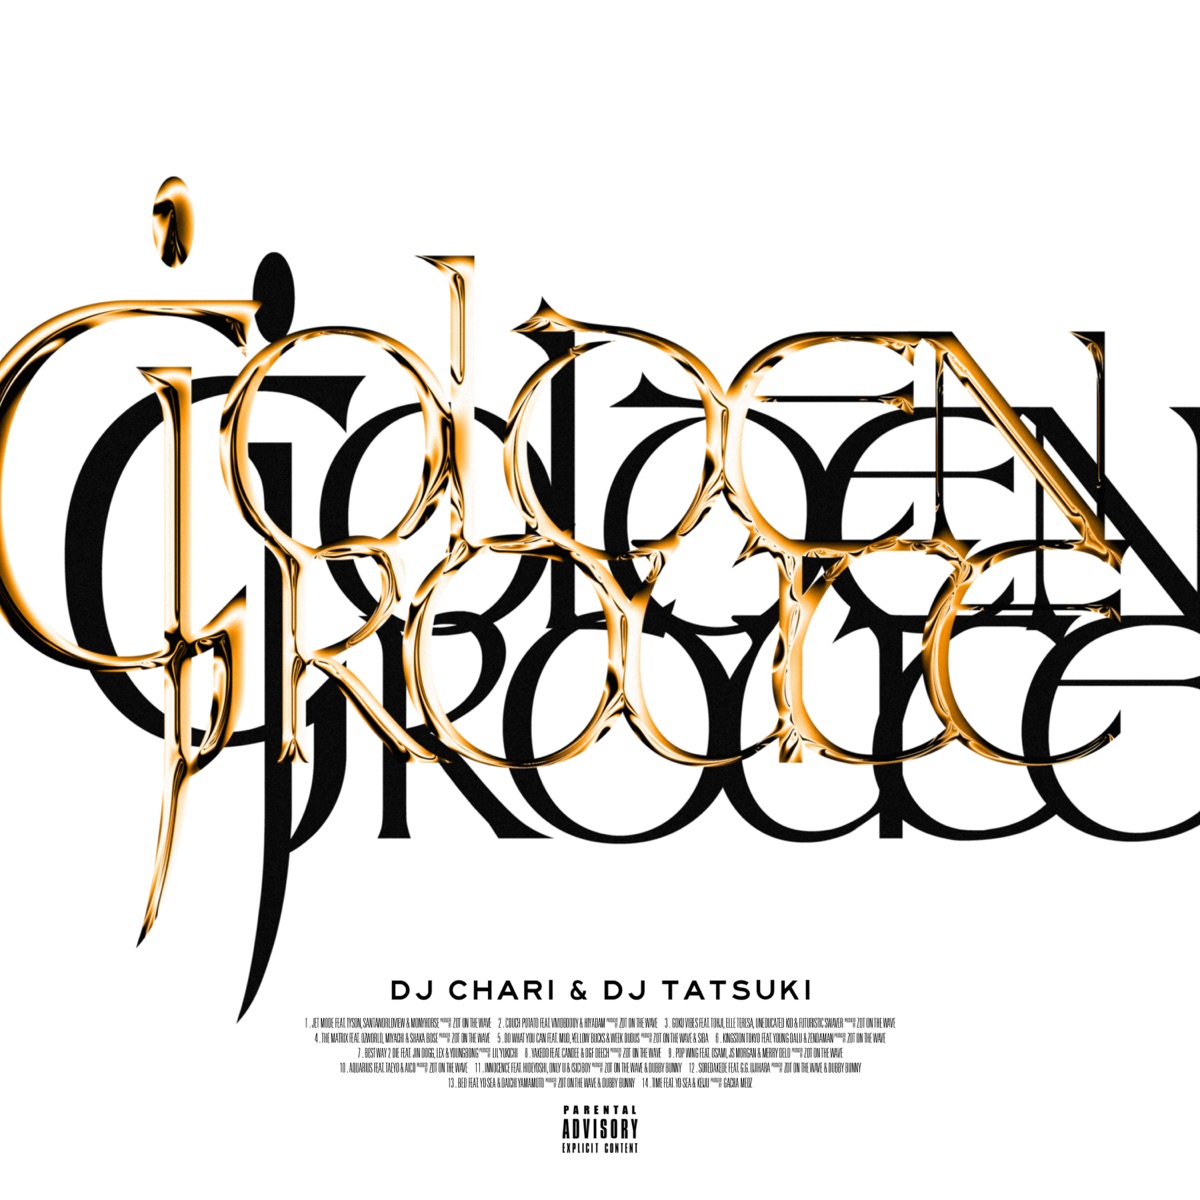 『DJ CHARI & DJ TATSUKI - Kingston Tokyo (feat. Young Dalu & ZENDAMAN) 歌詞』収録の『GOLDEN ROUTE』ジャケット